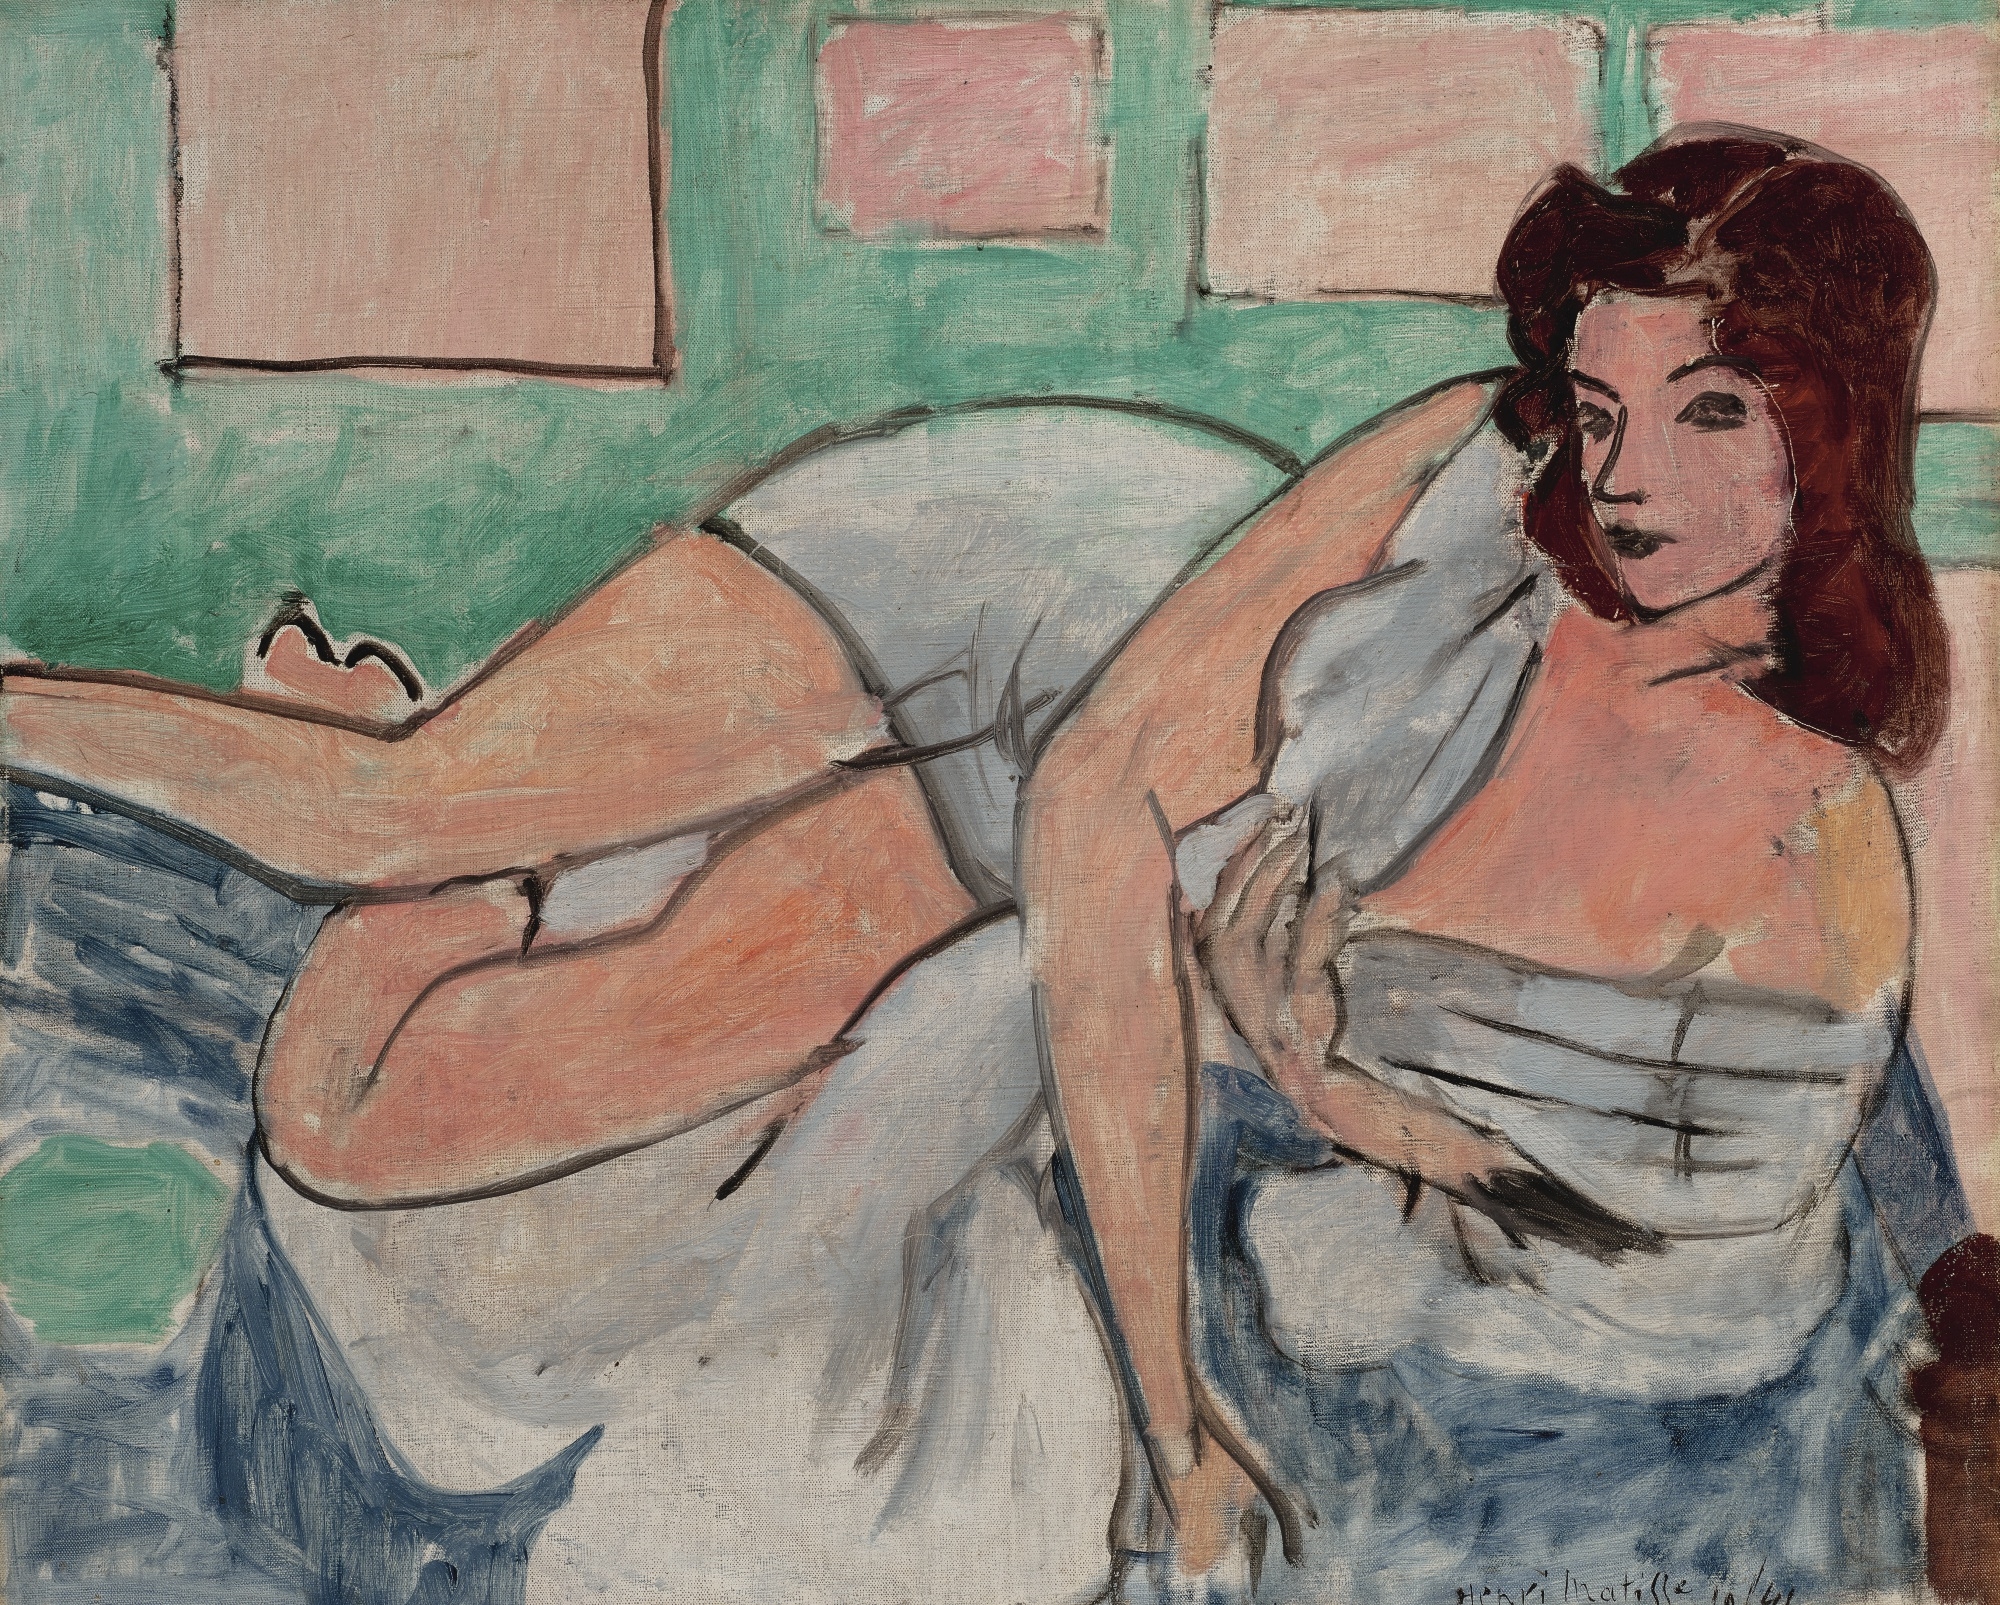 NU AU PEIGNOIR by Henri Matisse, 1941